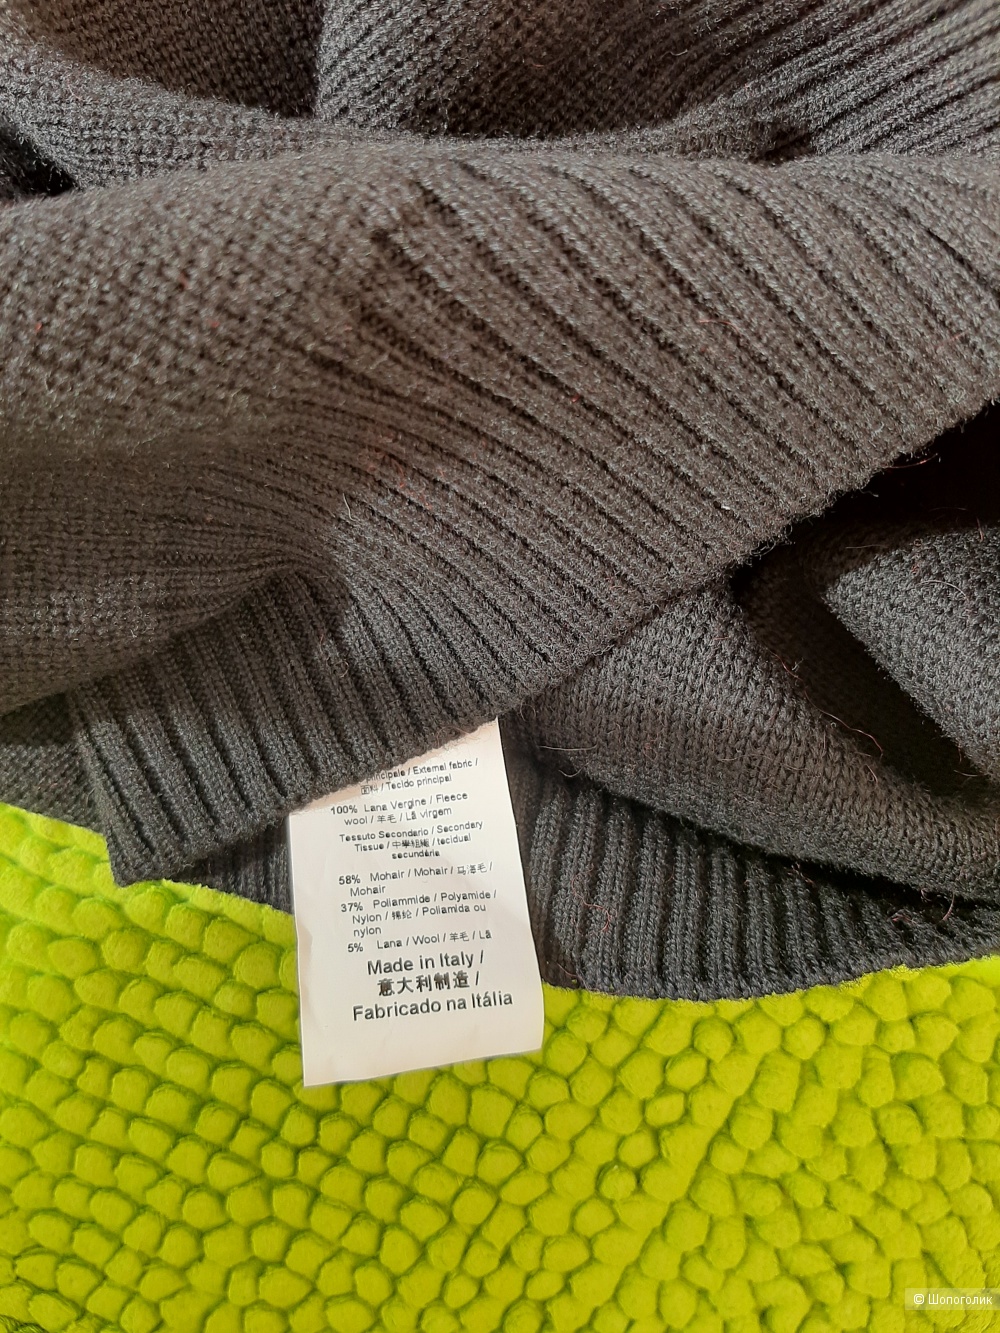 Шерстяной свитер ICEBERC 42it-44 рос. размер